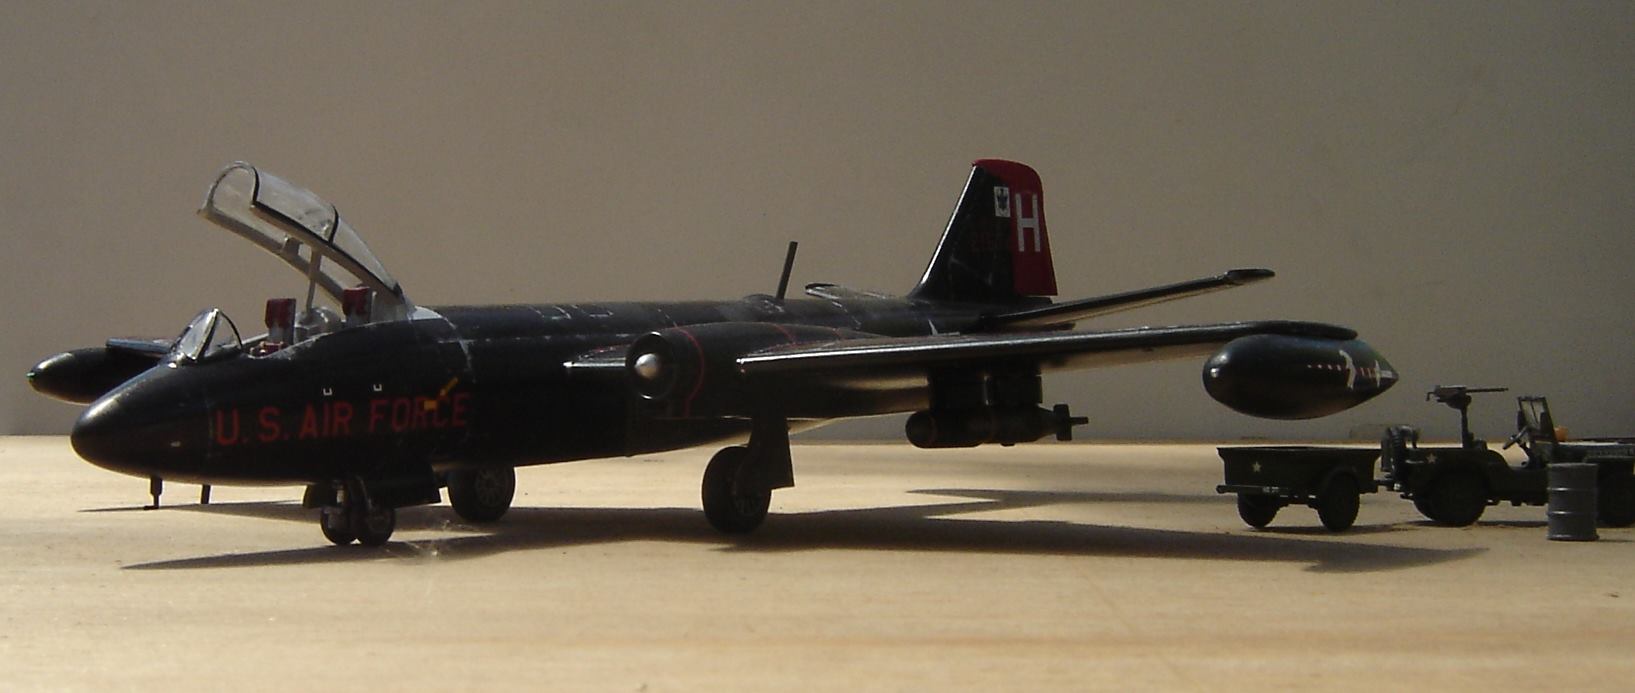 Airfix Martin B-57 in 1/72 scale